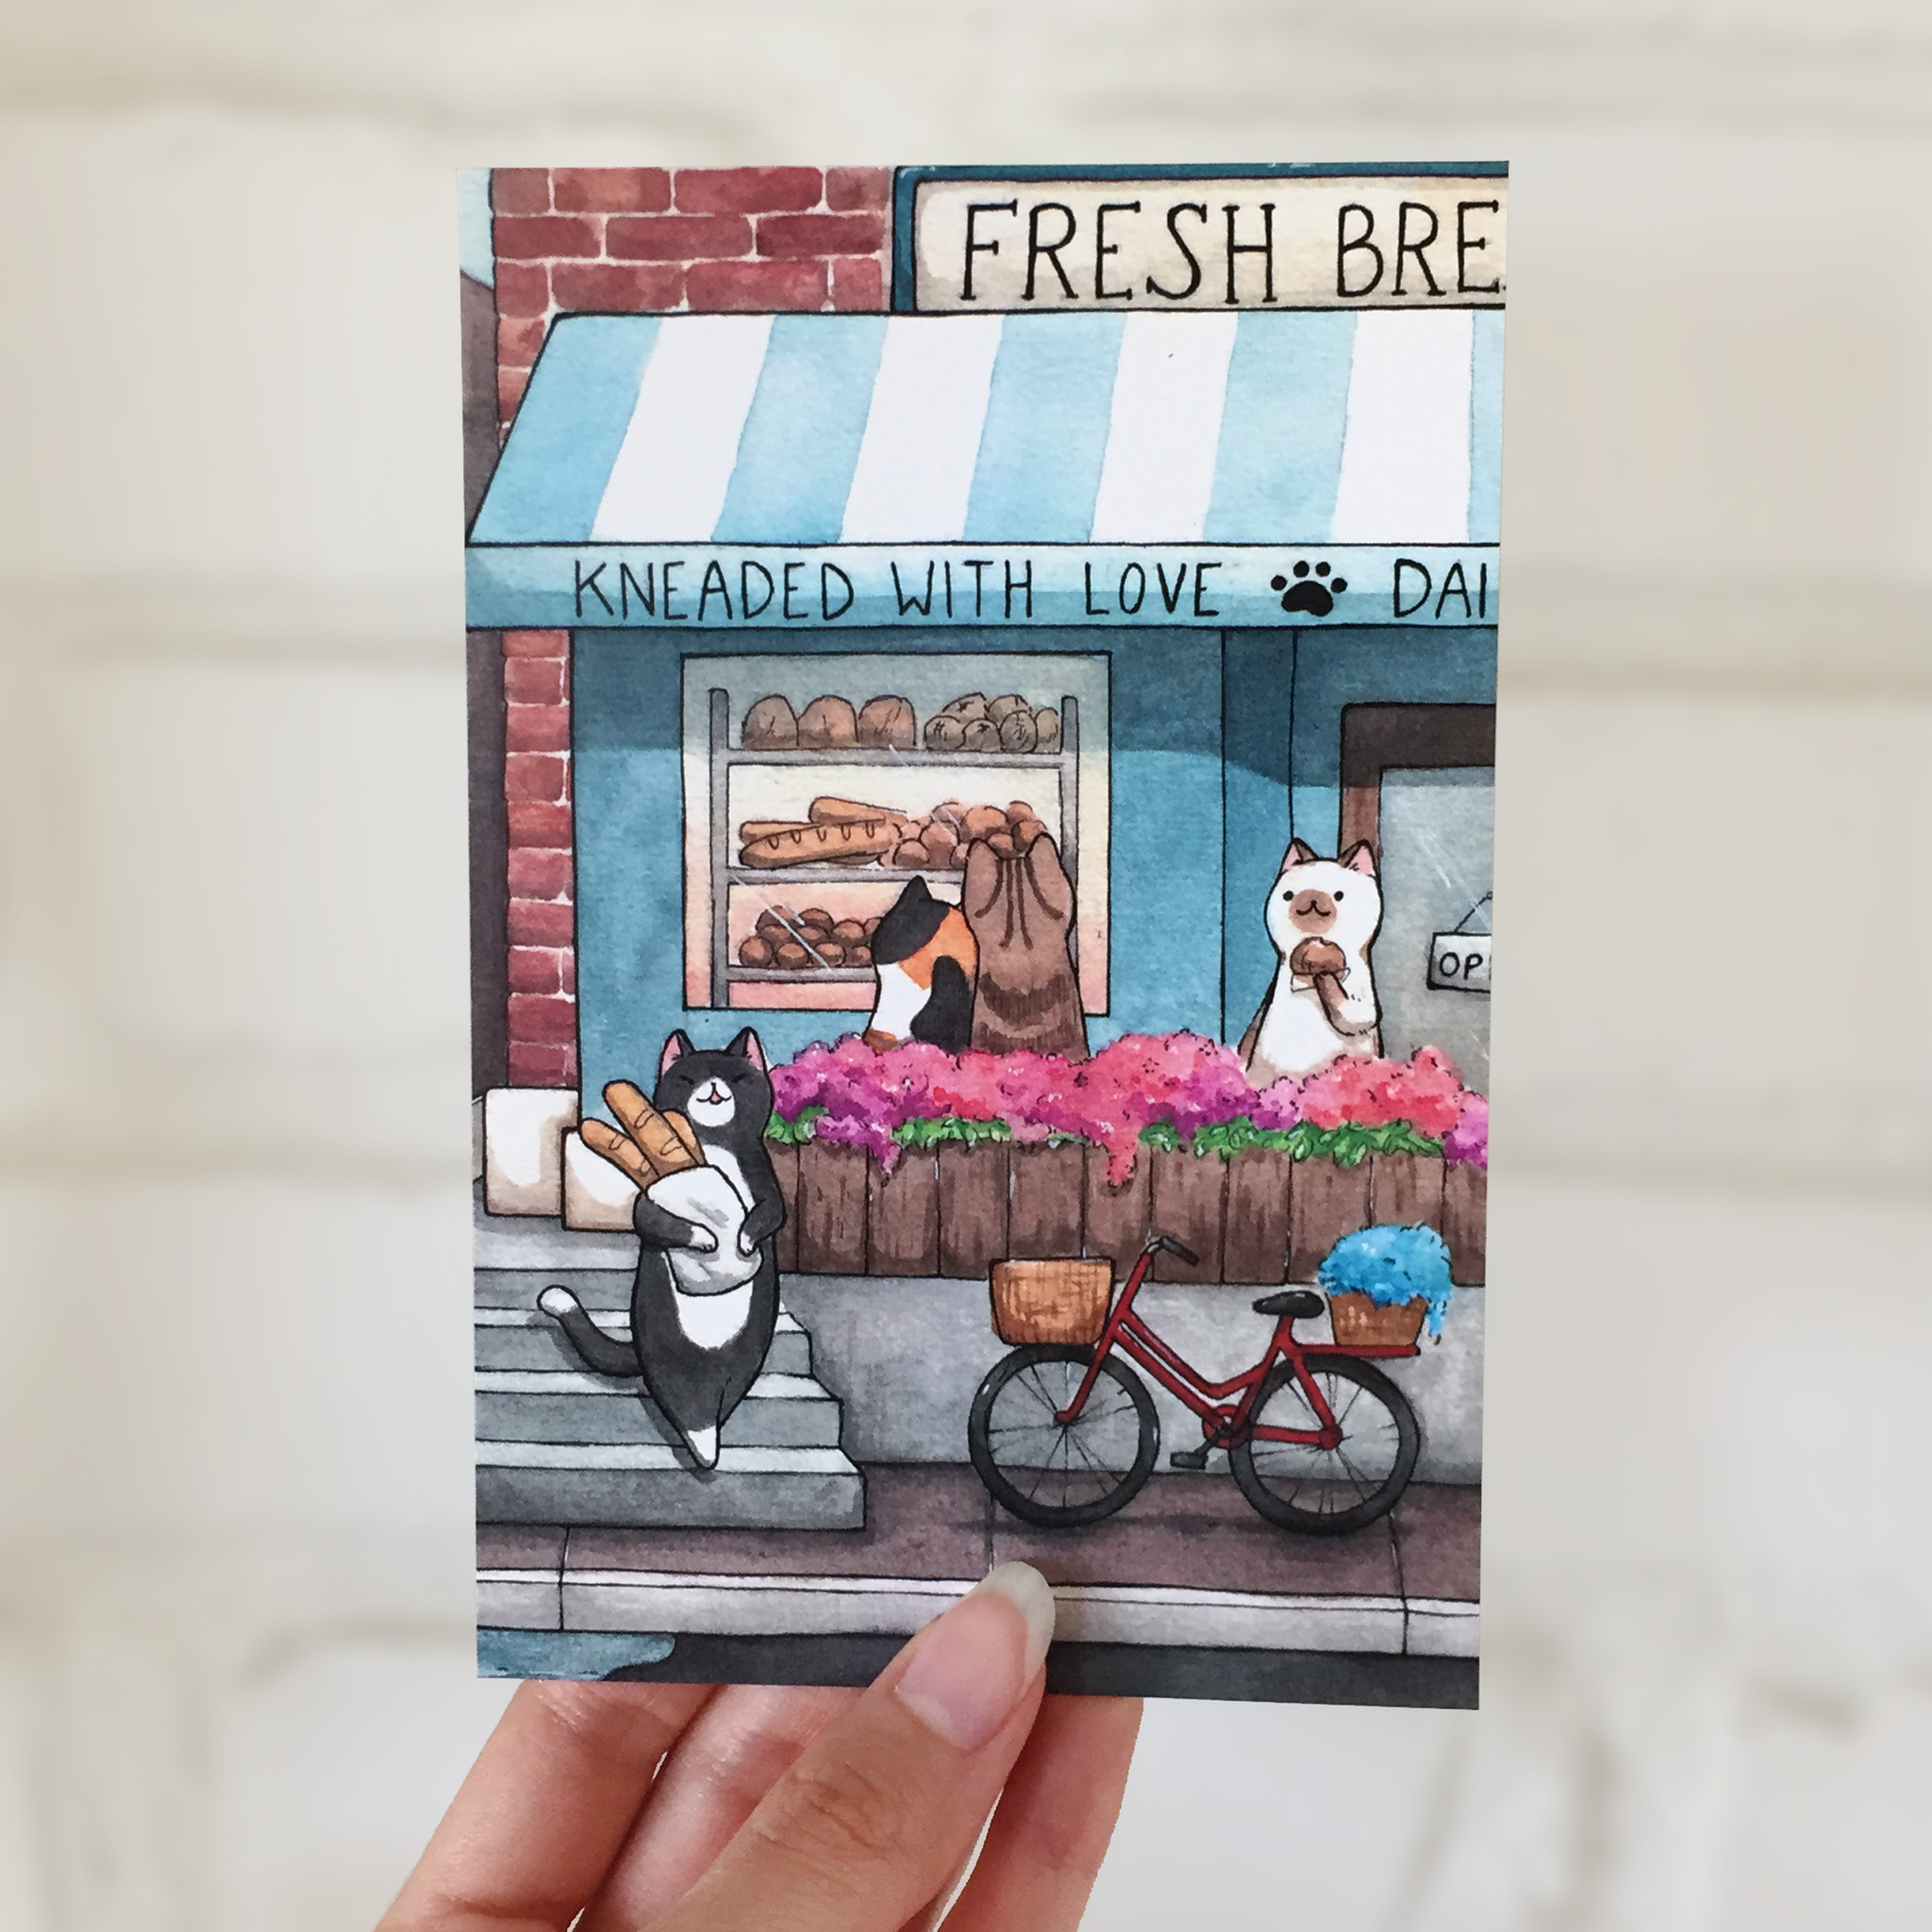 Bakery Front Postcard - loststreetkat